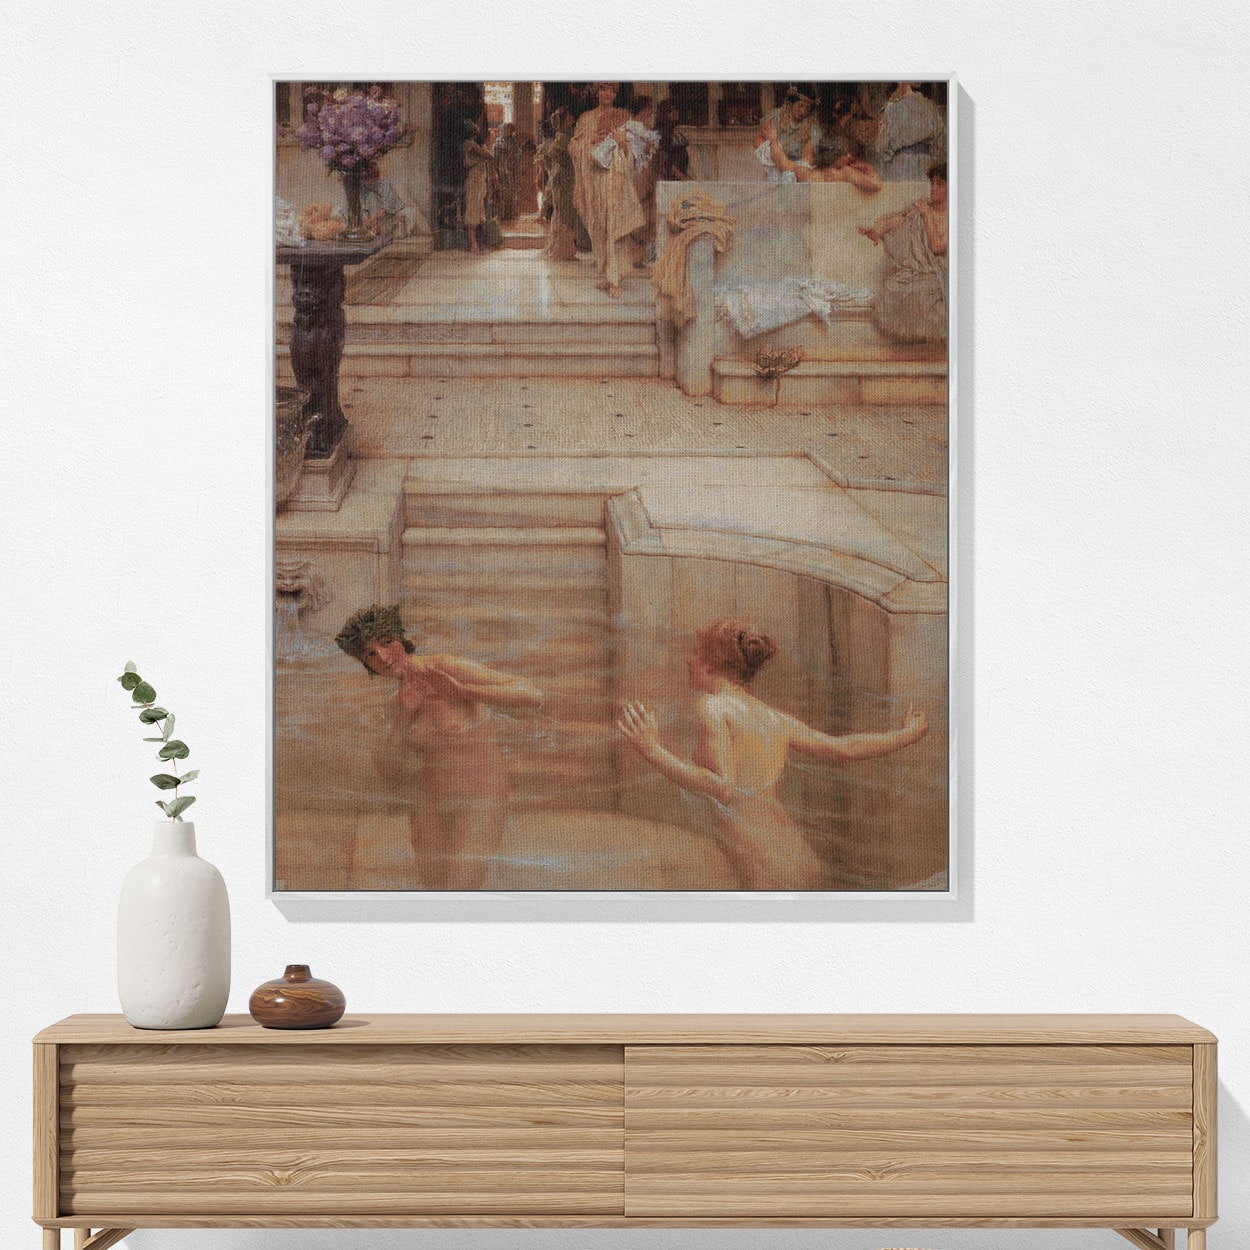 Women Bathing Woven Blanket Hanging on a Wall as Framed Wall Art